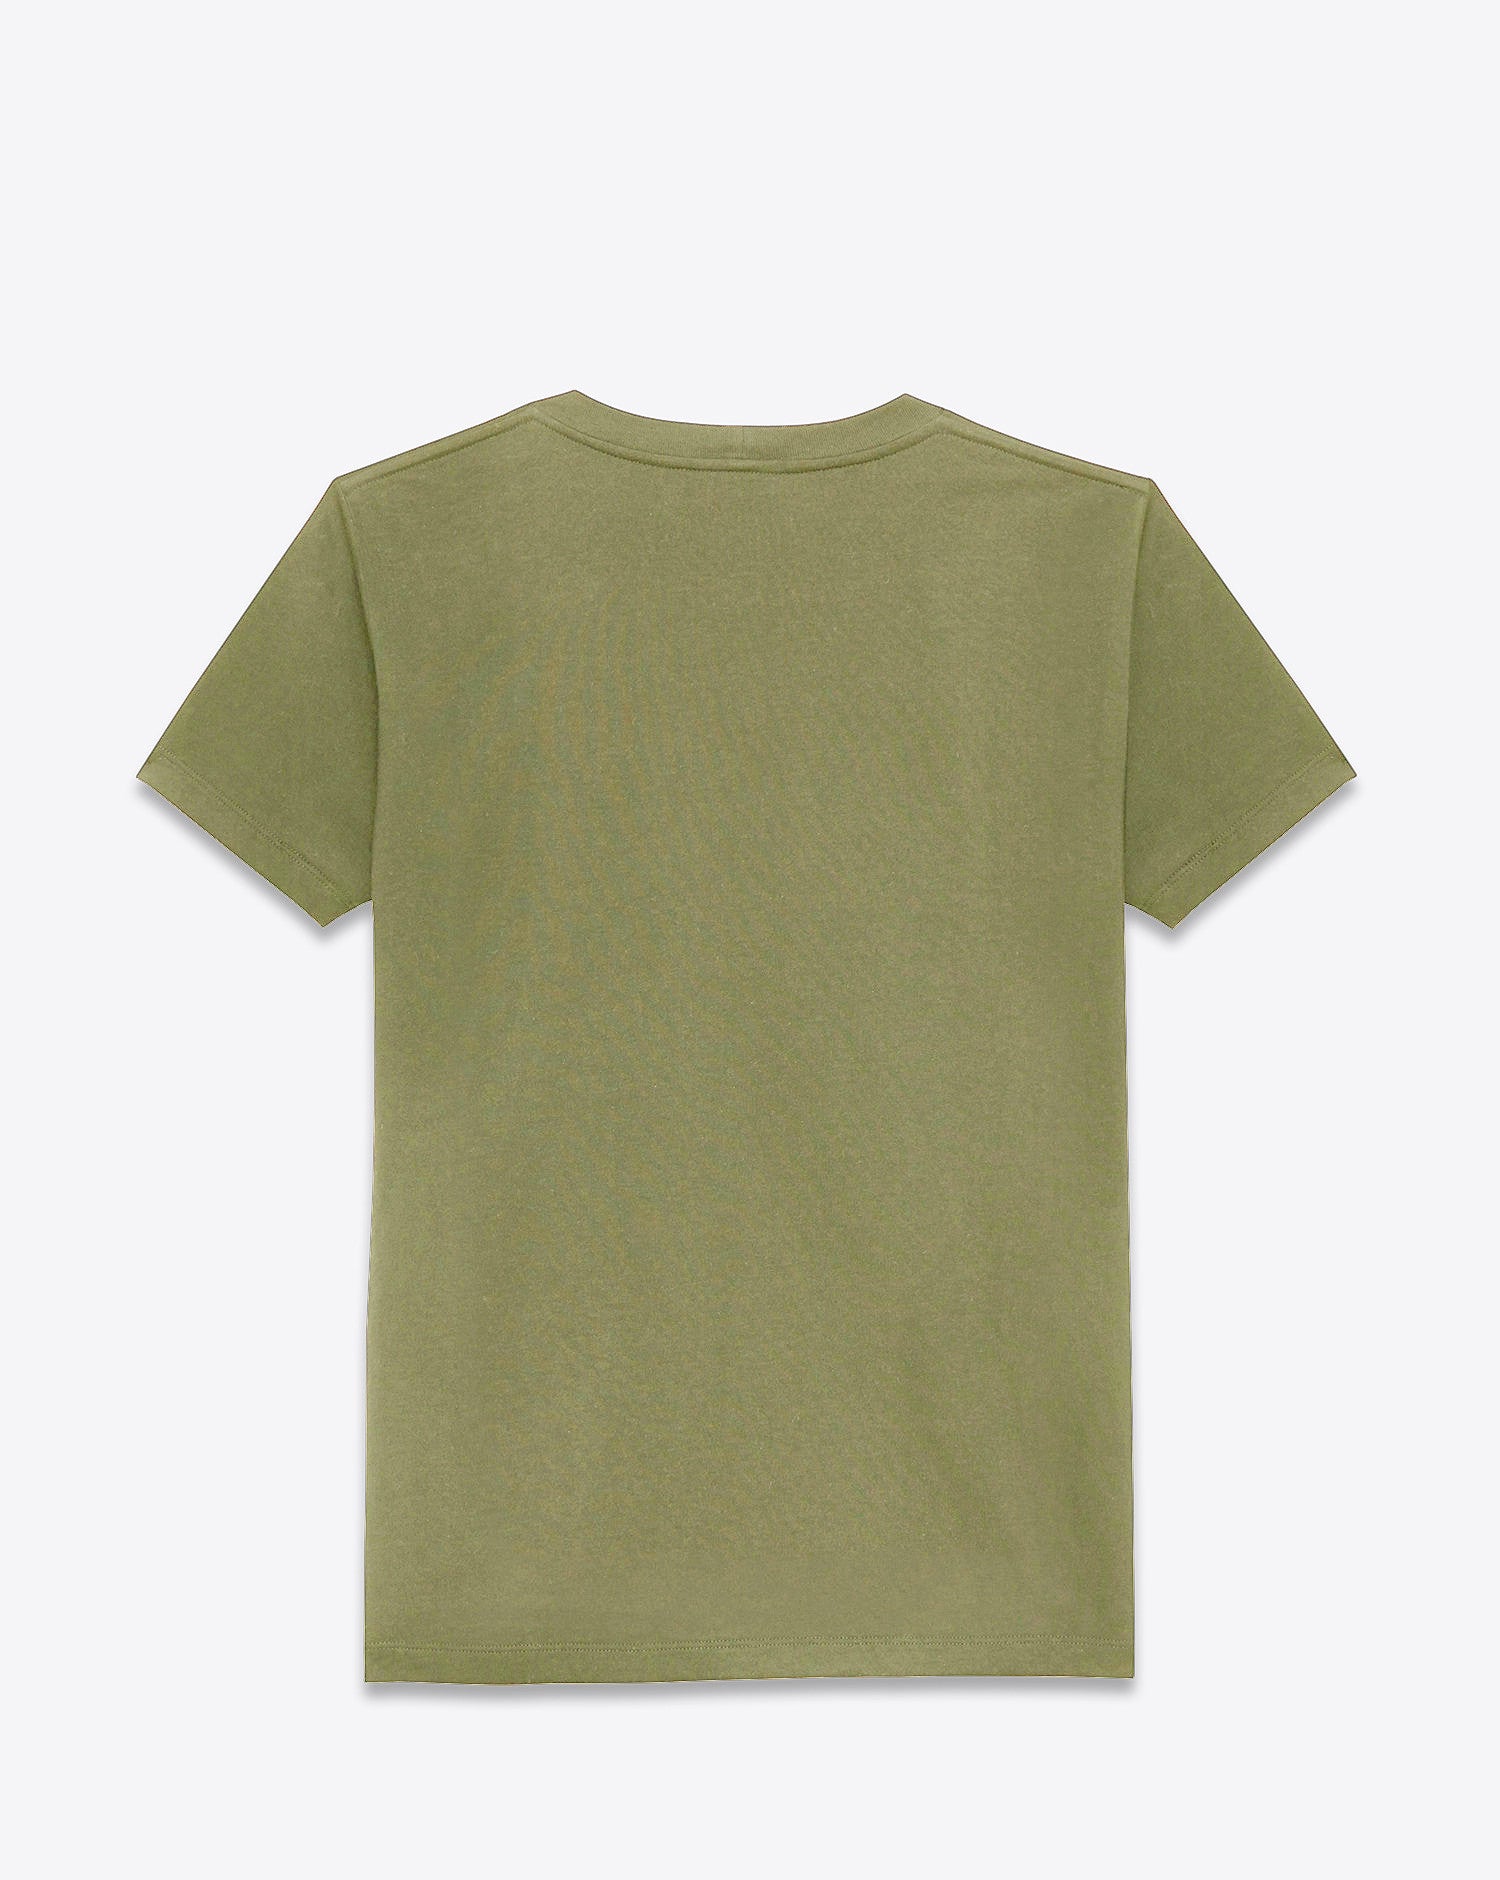 Wavy Baby T-Shirt Olive Green - DEMEANOIR - 1